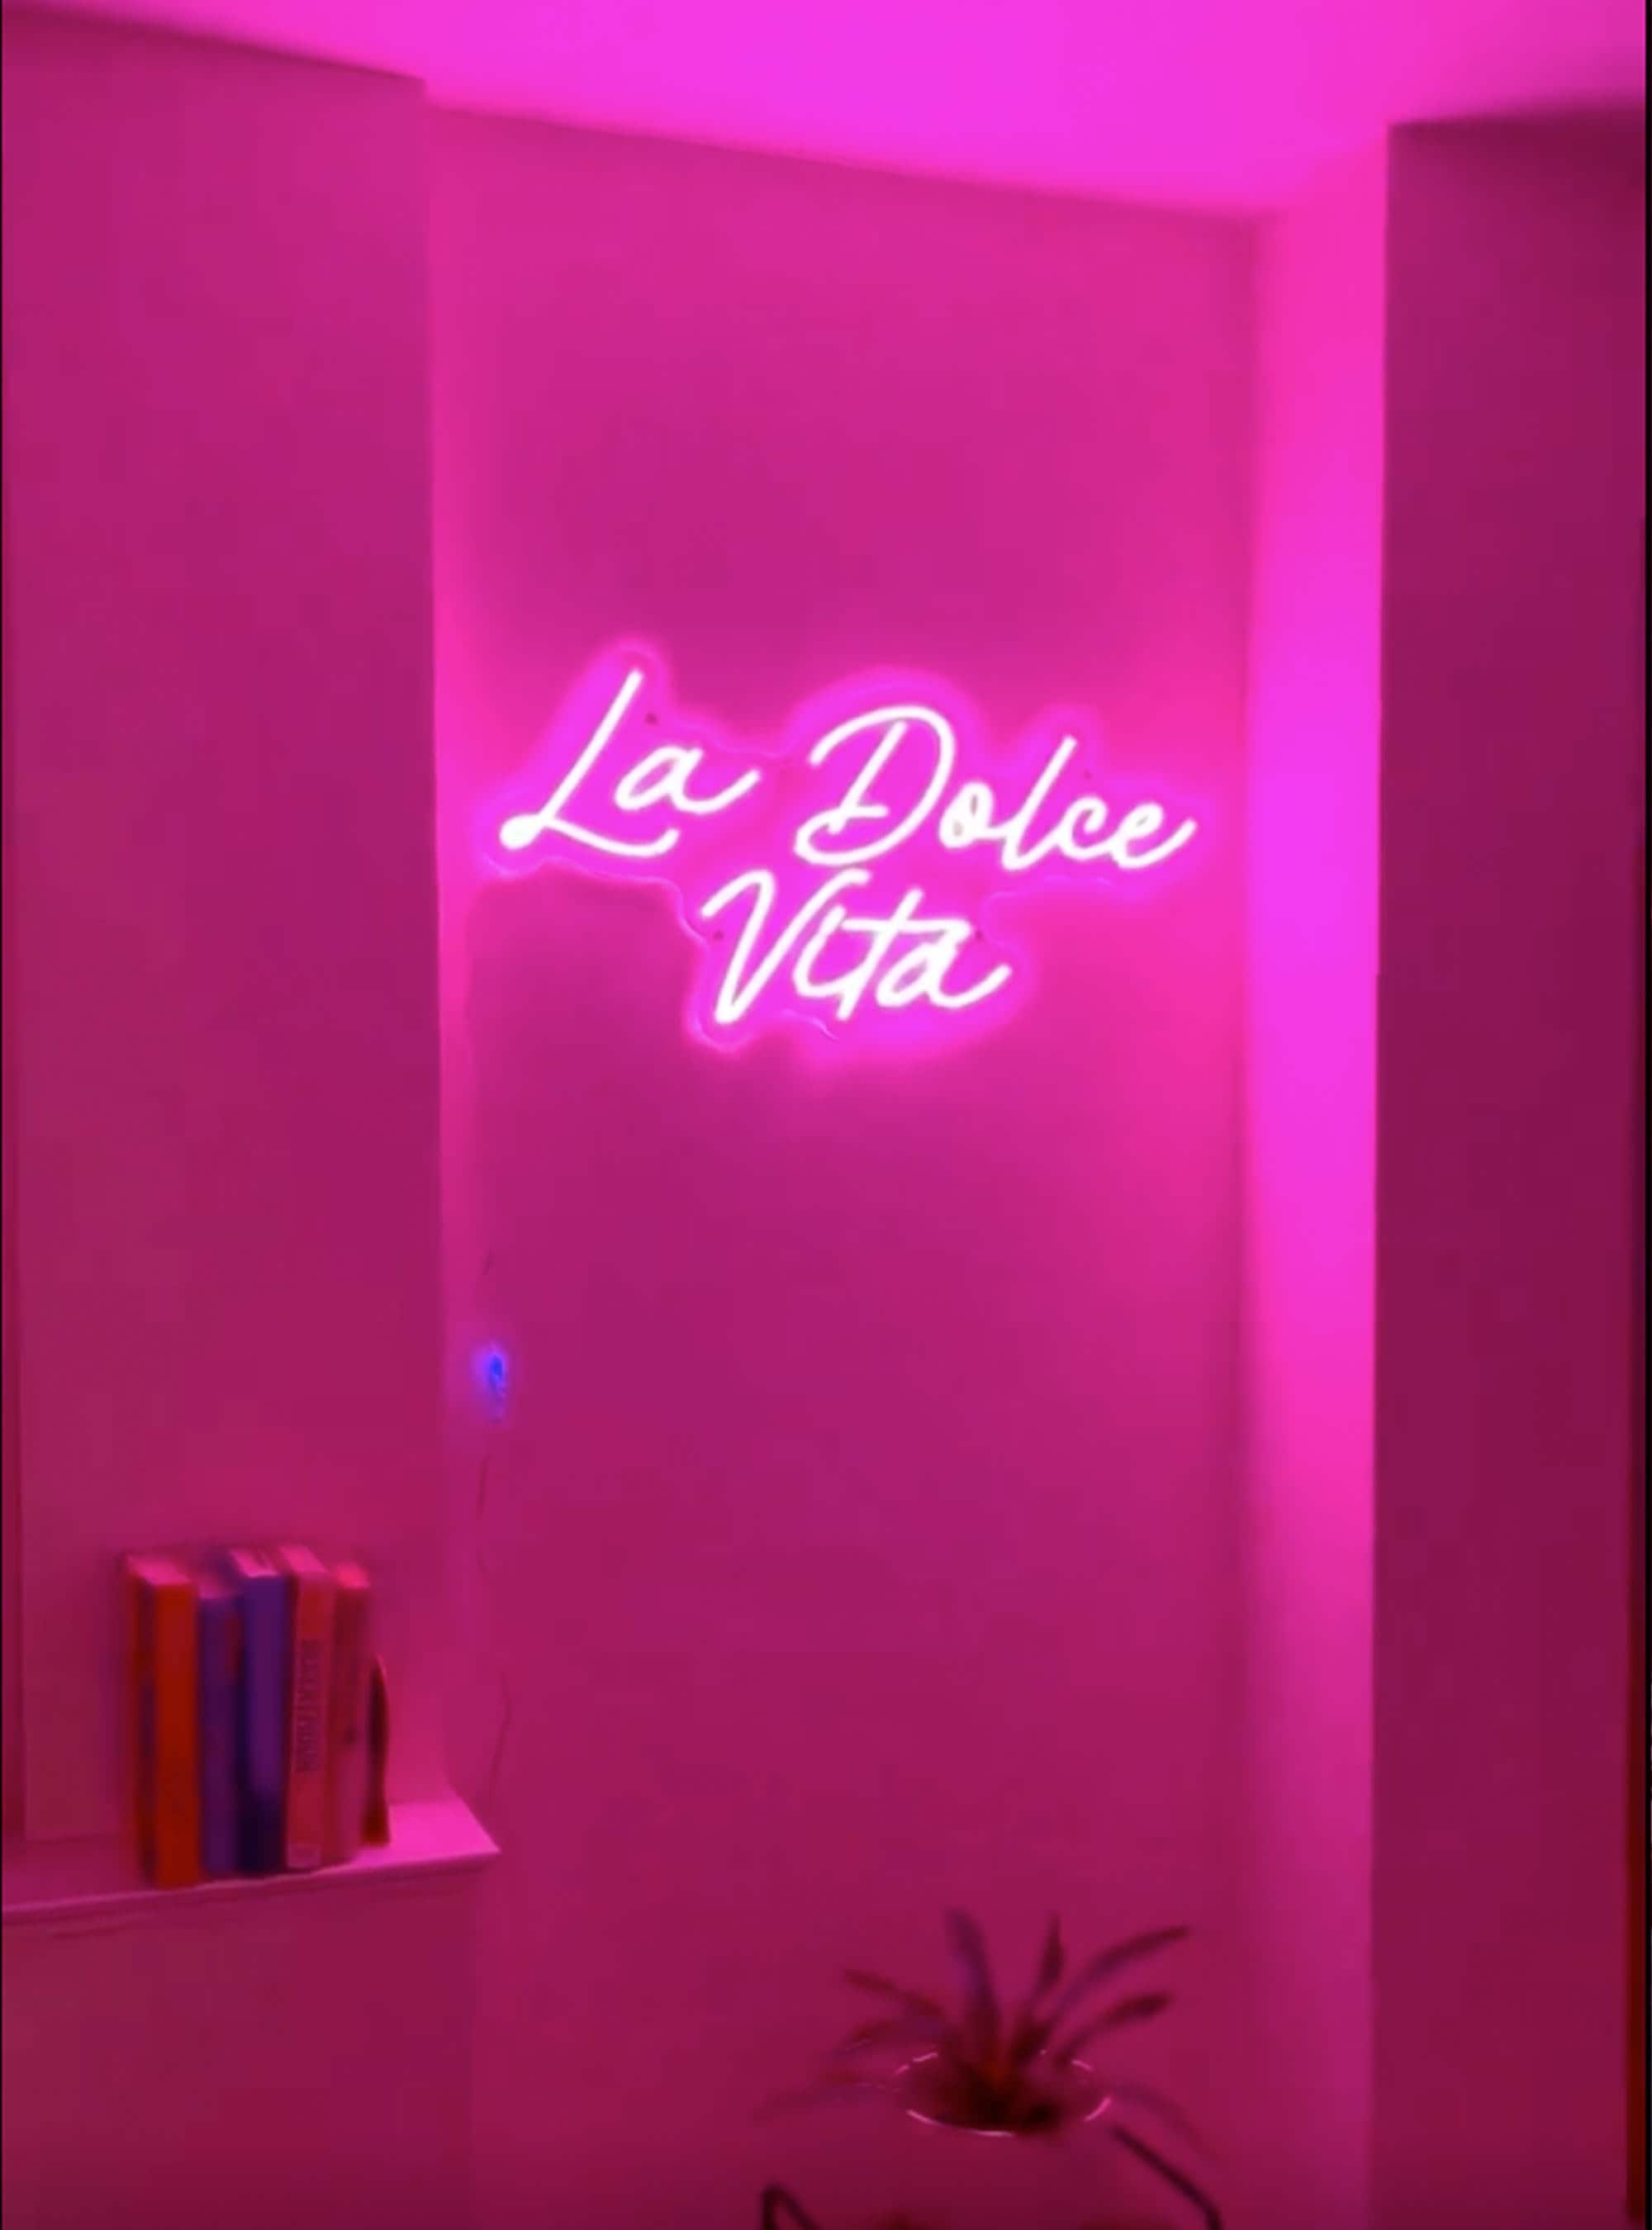 La Dolce Vita in Neon Lights Pink LED Illuminated Text Sign